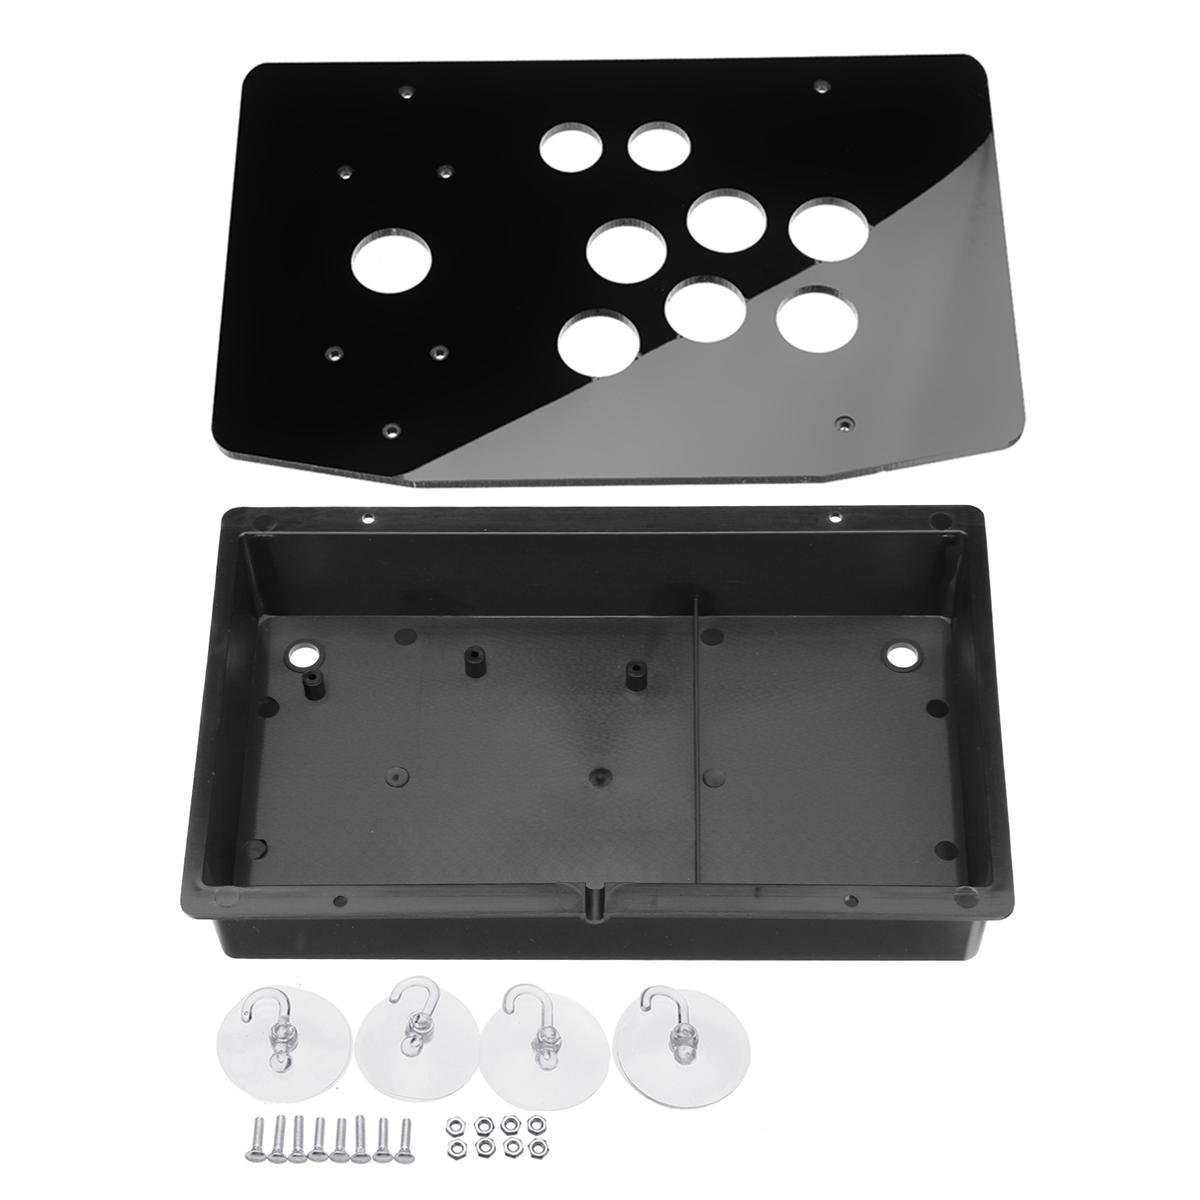 DIY Clear Black Acrylic Panel Case Sturdy Construction for Arcade Joystick Game Controller 15